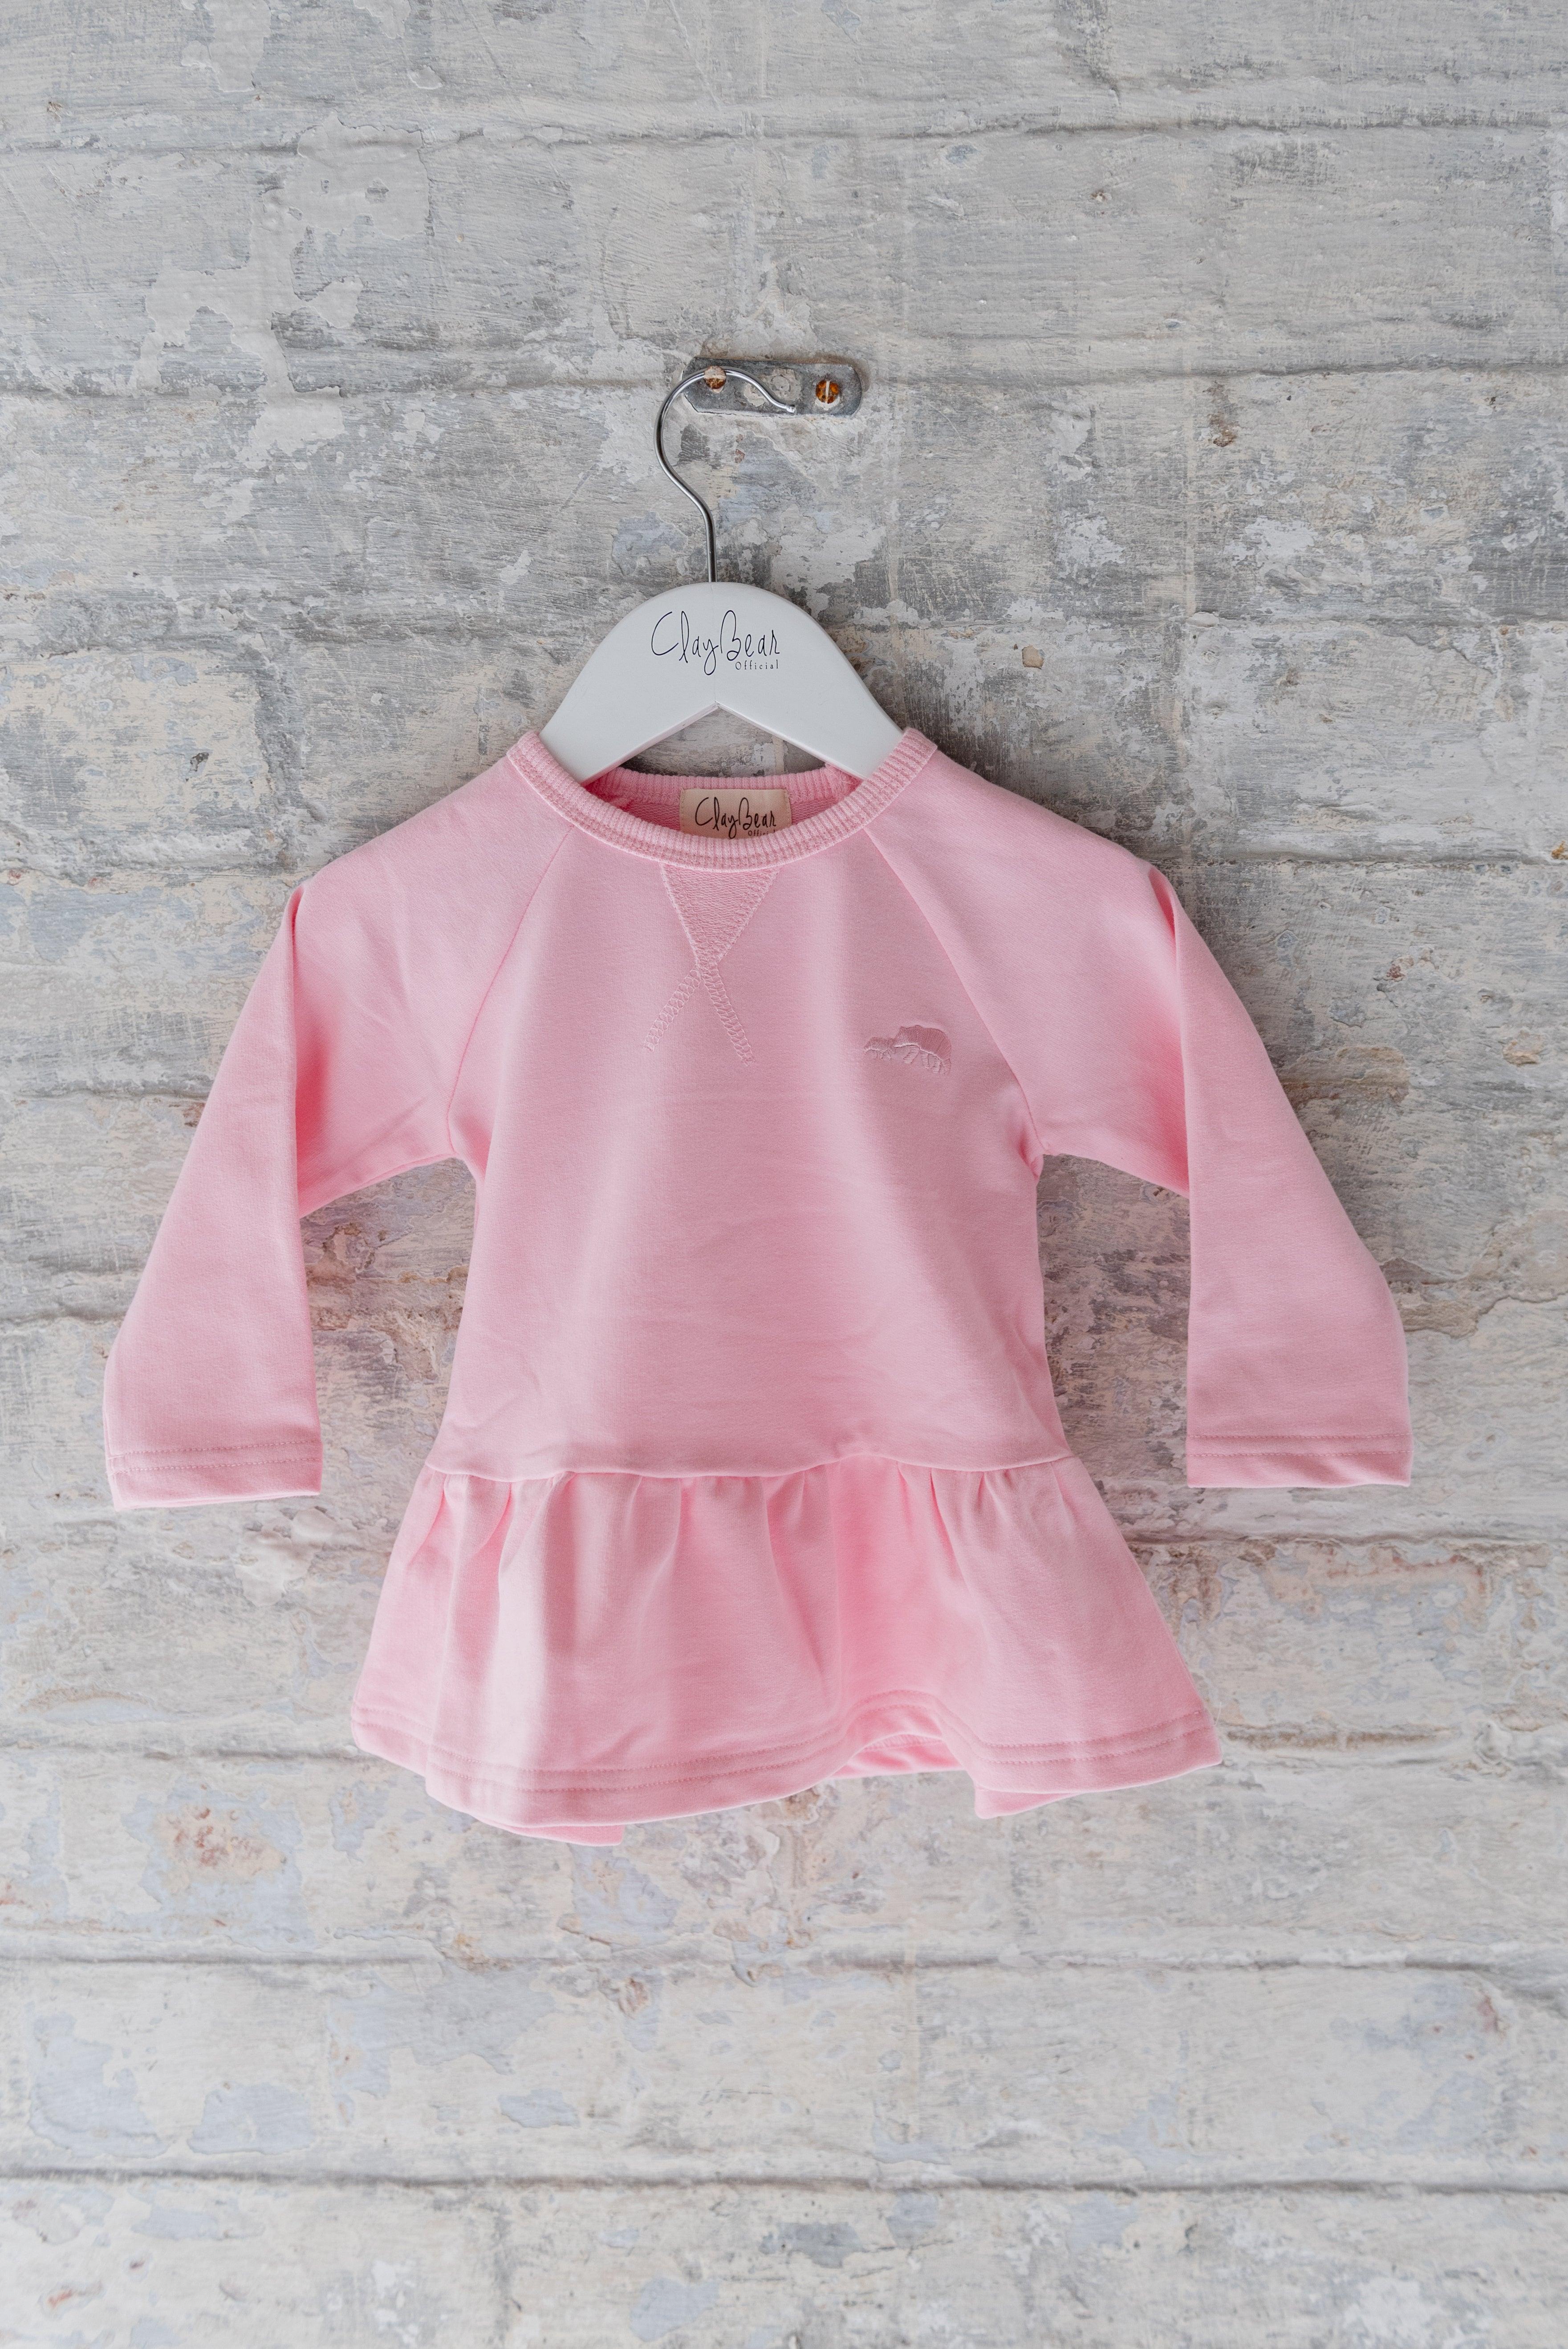 files/claybare-pink-sweatshirt-tunic-claybearofficial-2.jpg